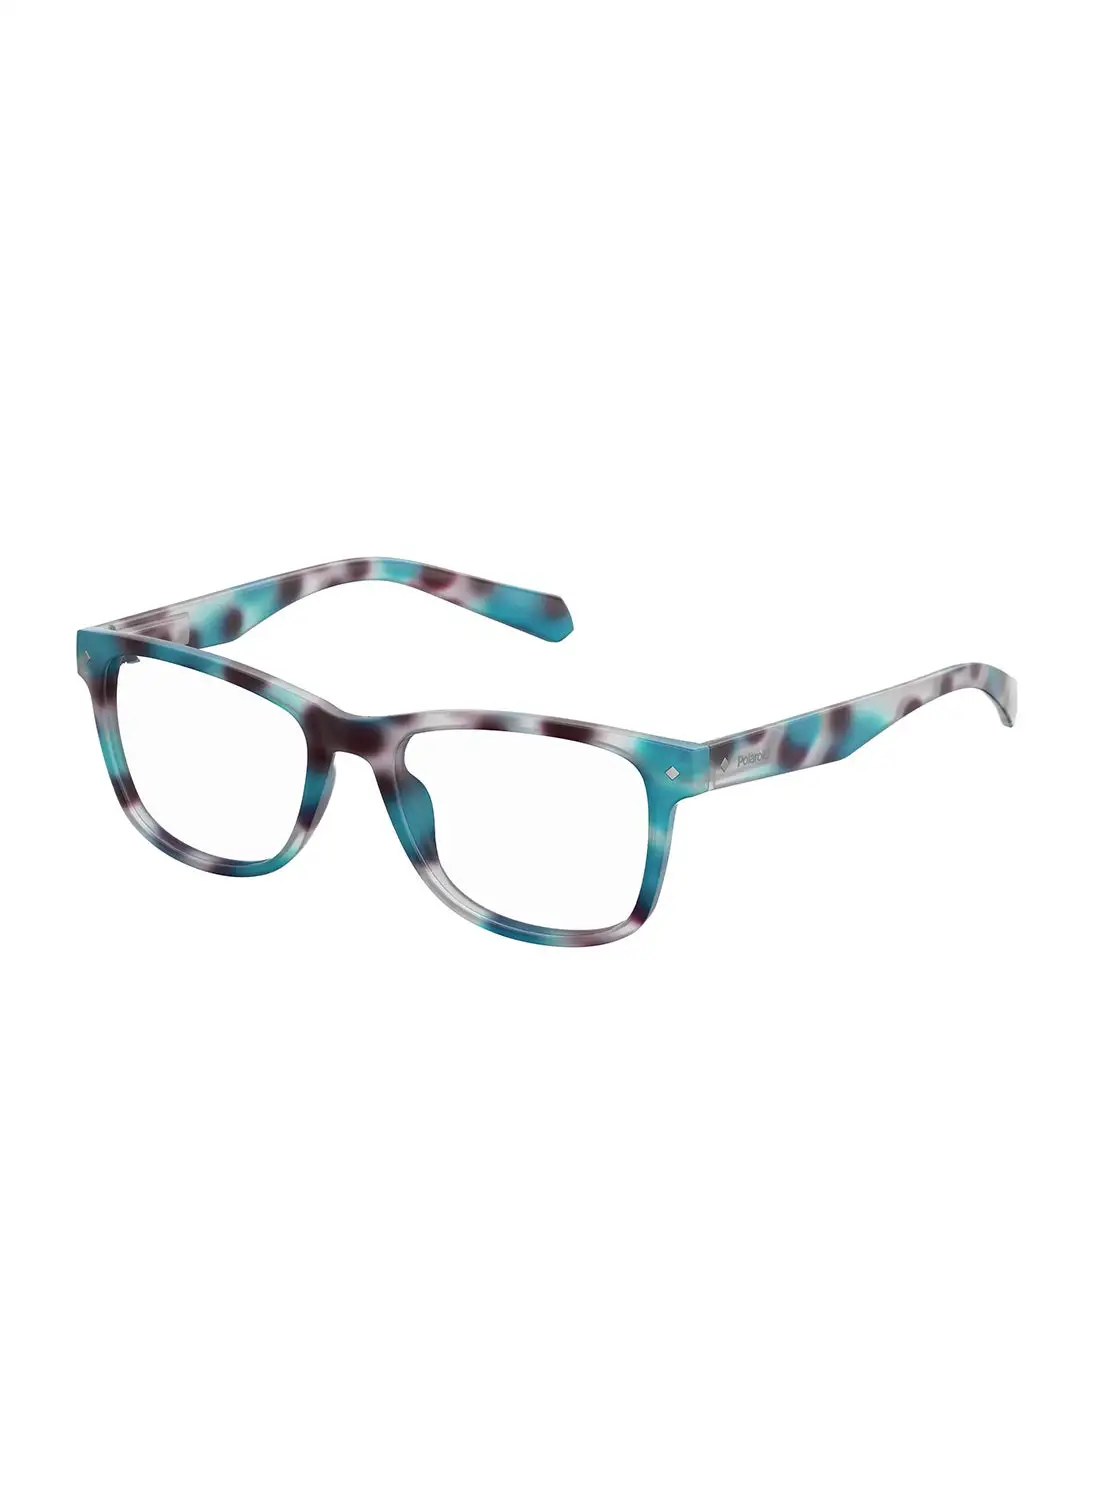 Polaroid Unisex Square Reading Glasses - Pld 0020/R Blue Havana 52 - Lens Size: 52 Mm